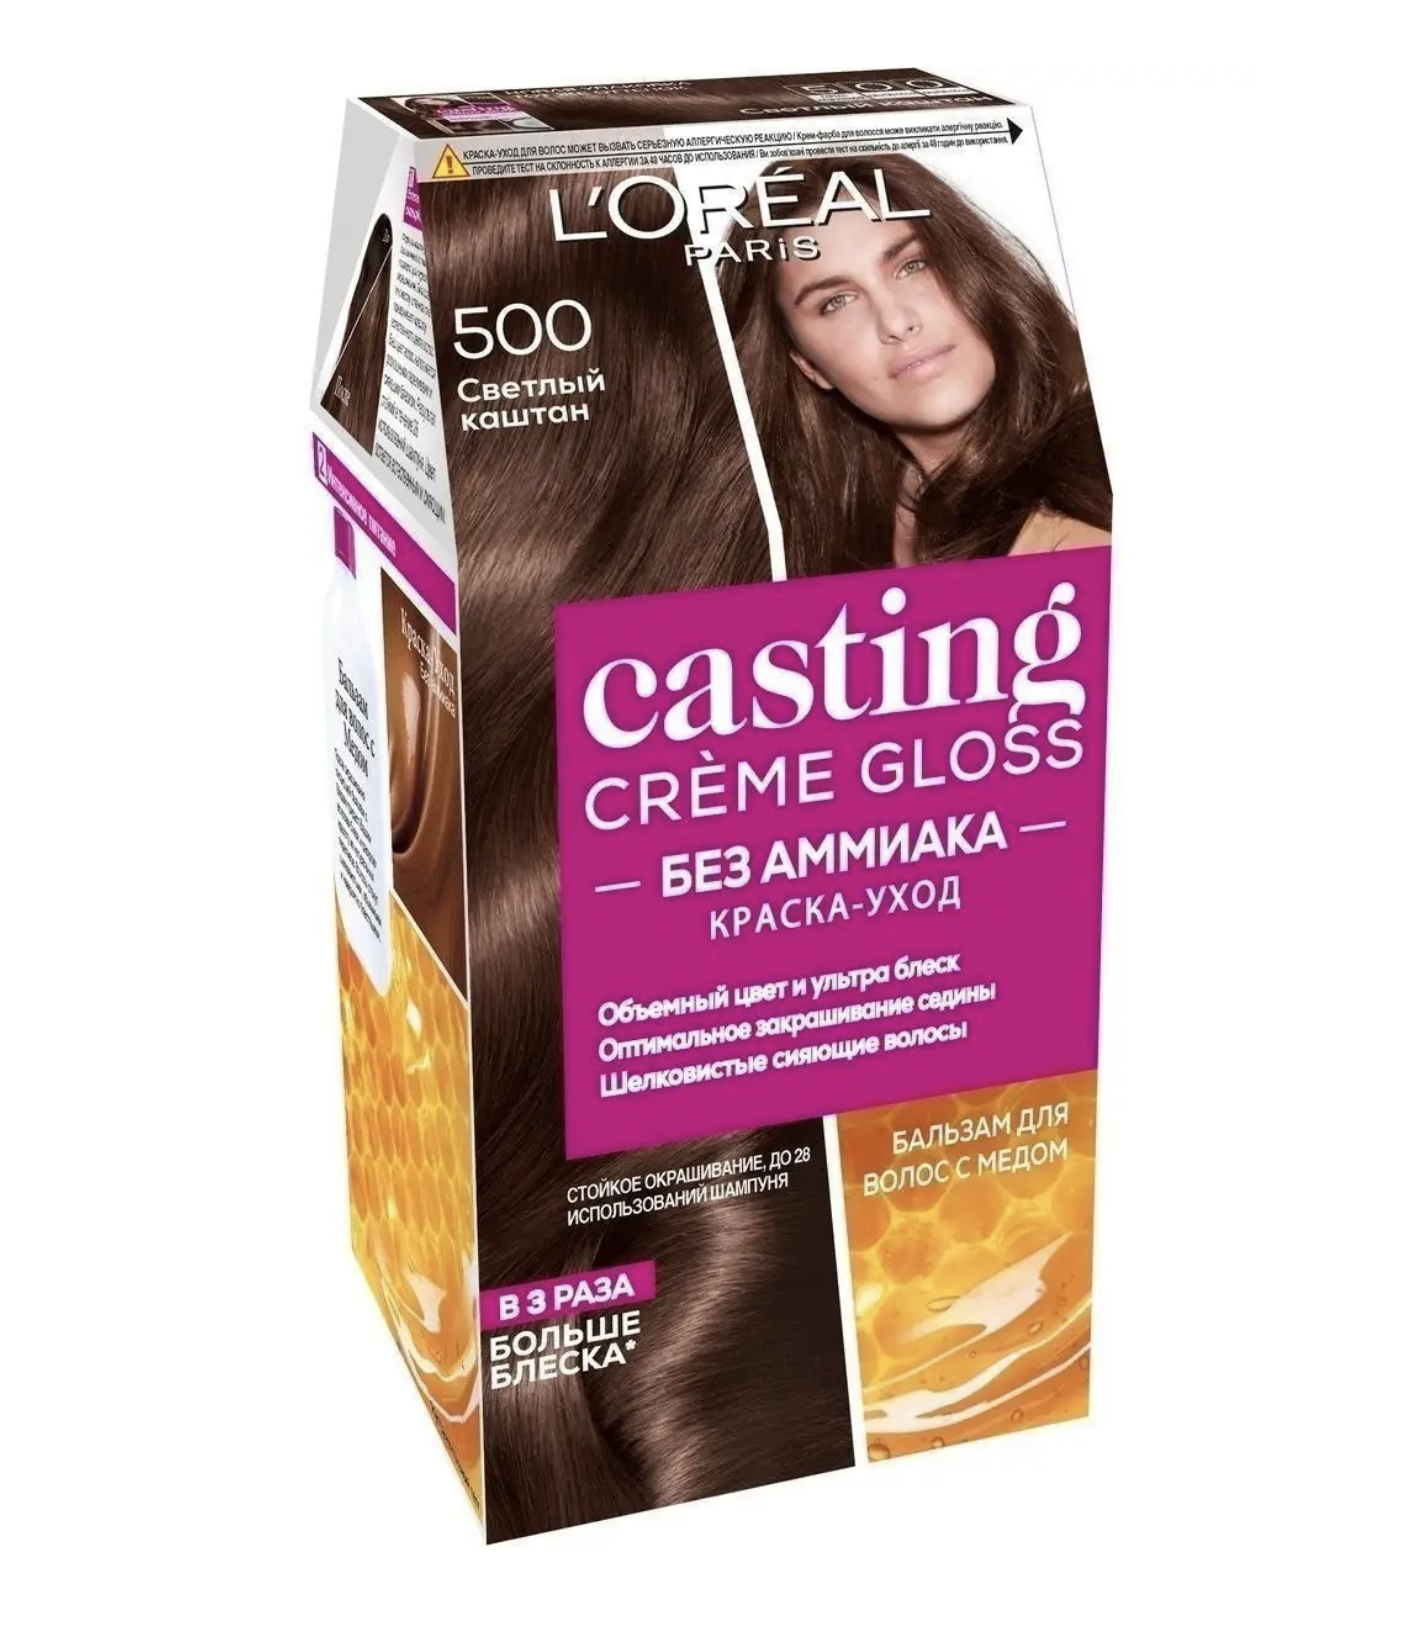     / Casting Creme Gloss - - 500   180 